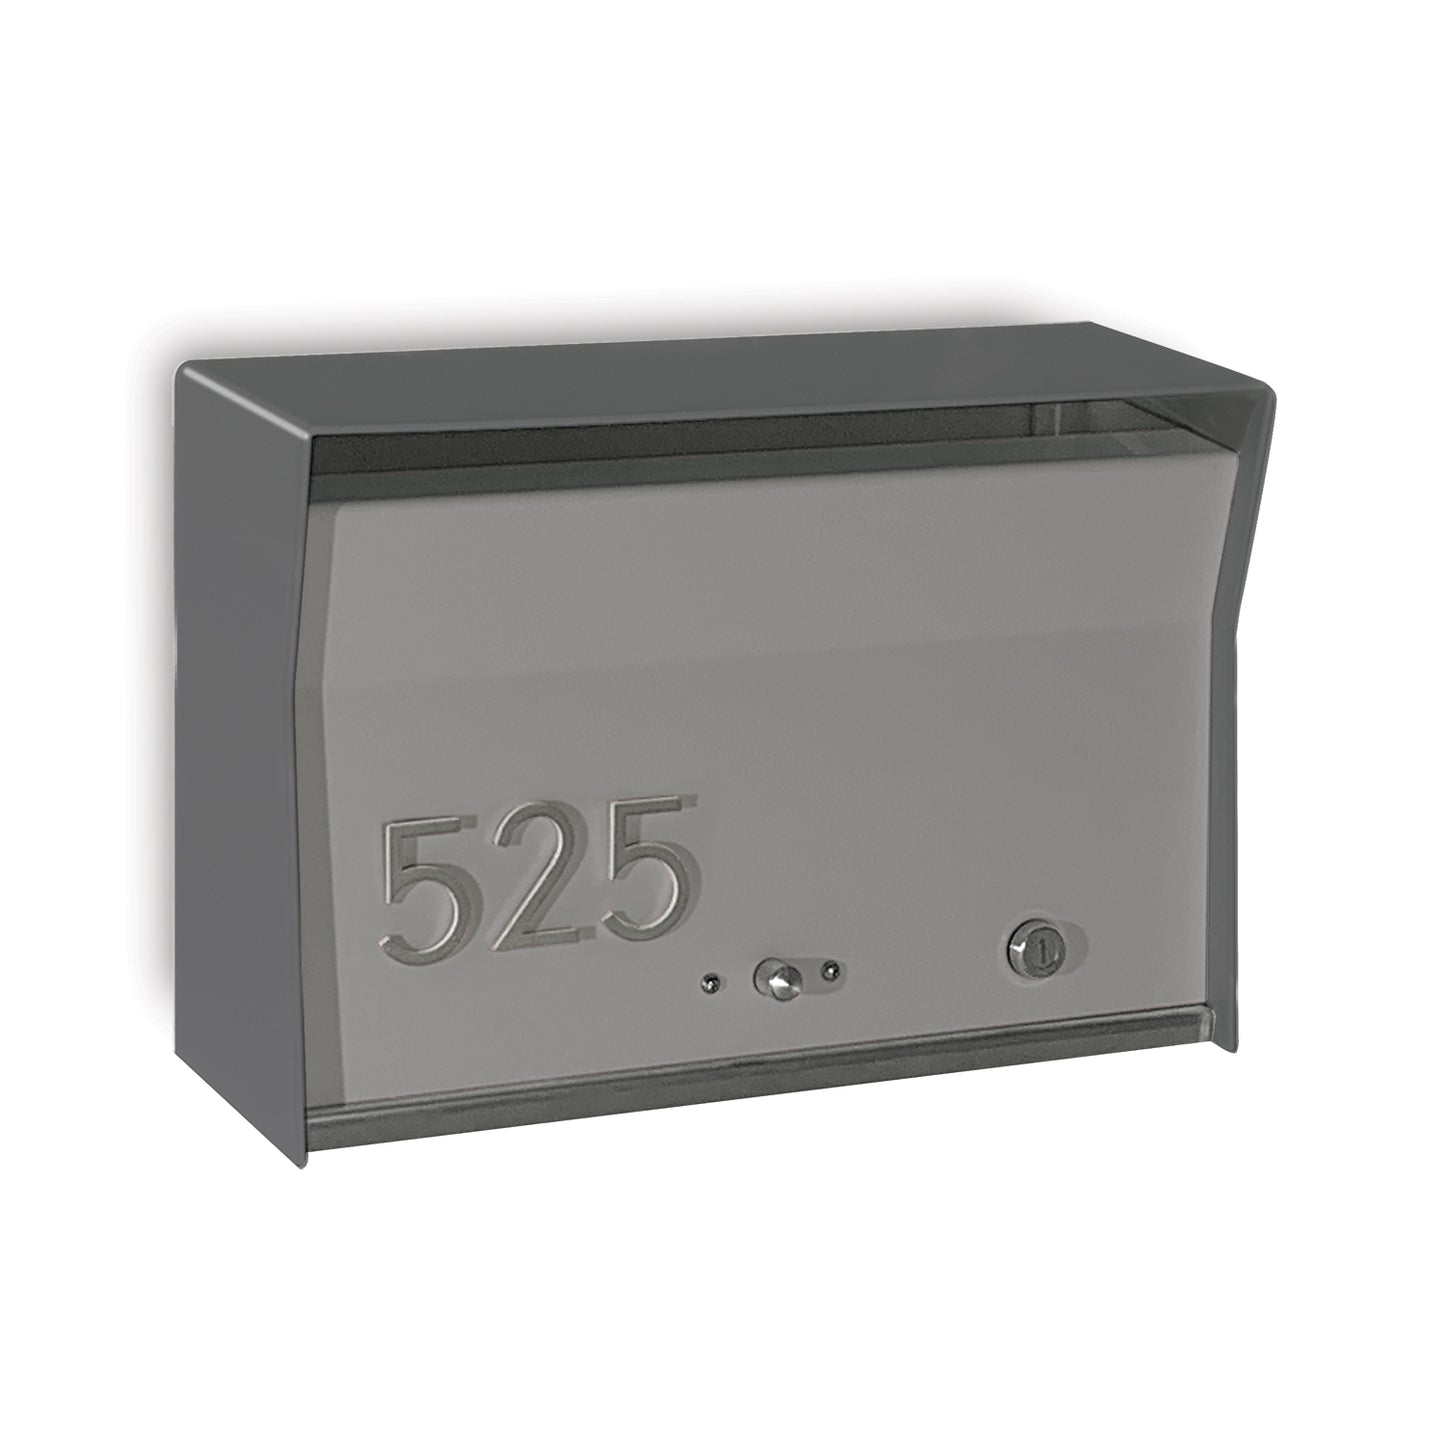 RetroBox Locking Wall Mounted Mailbox in COCONUT